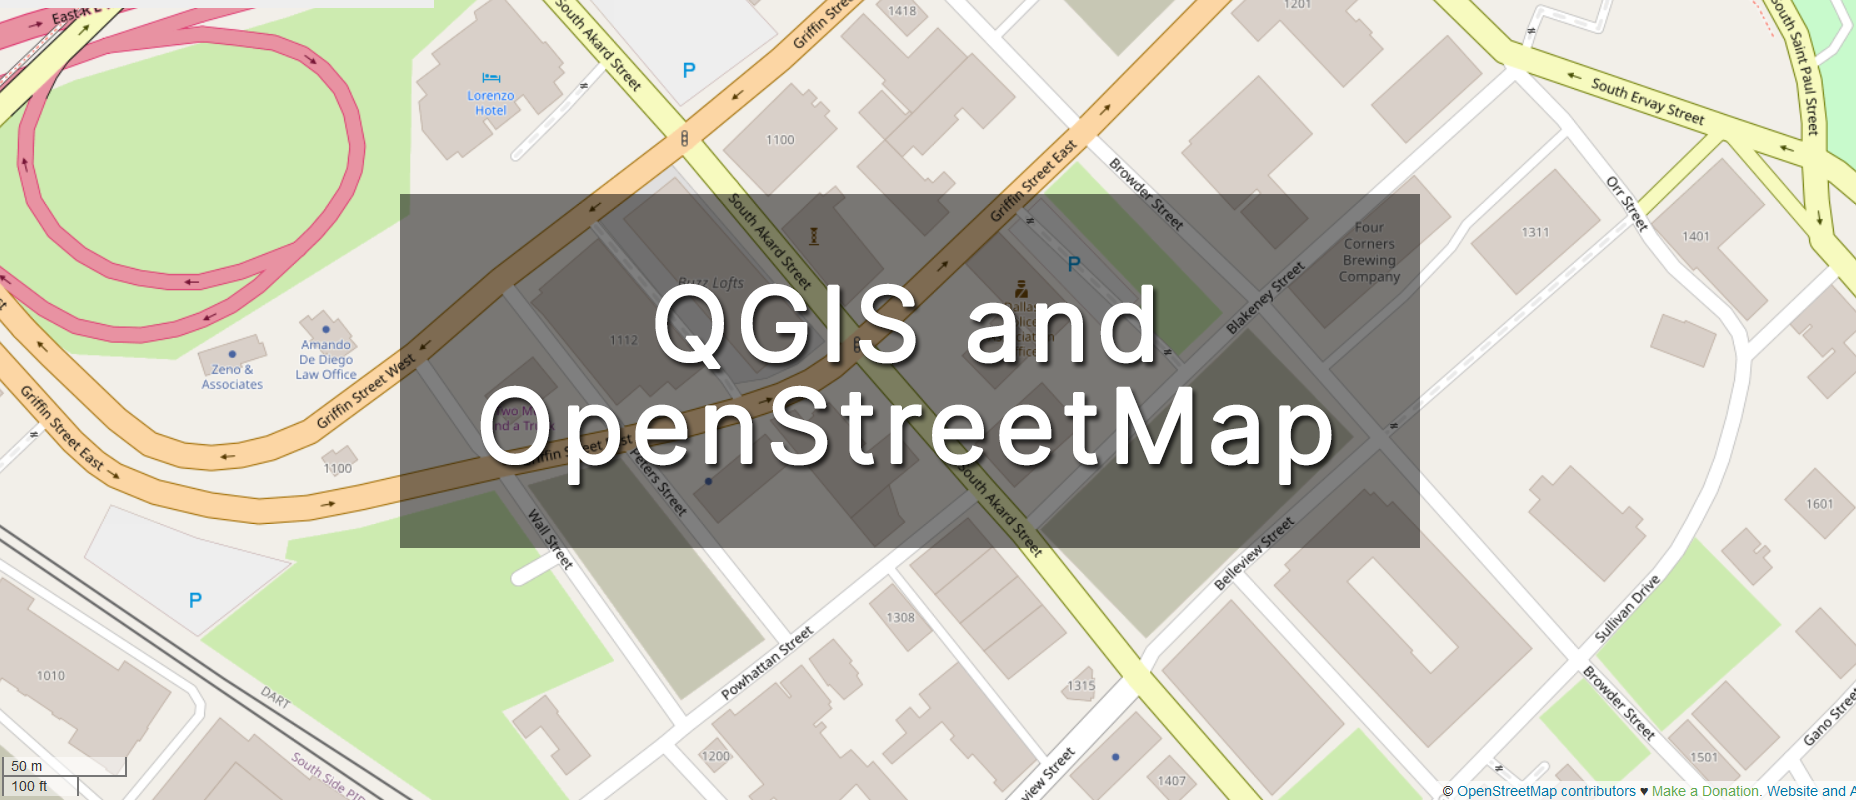 QGIS OpenStreetMap: OSM Plugins for QGIS - GIS Geography